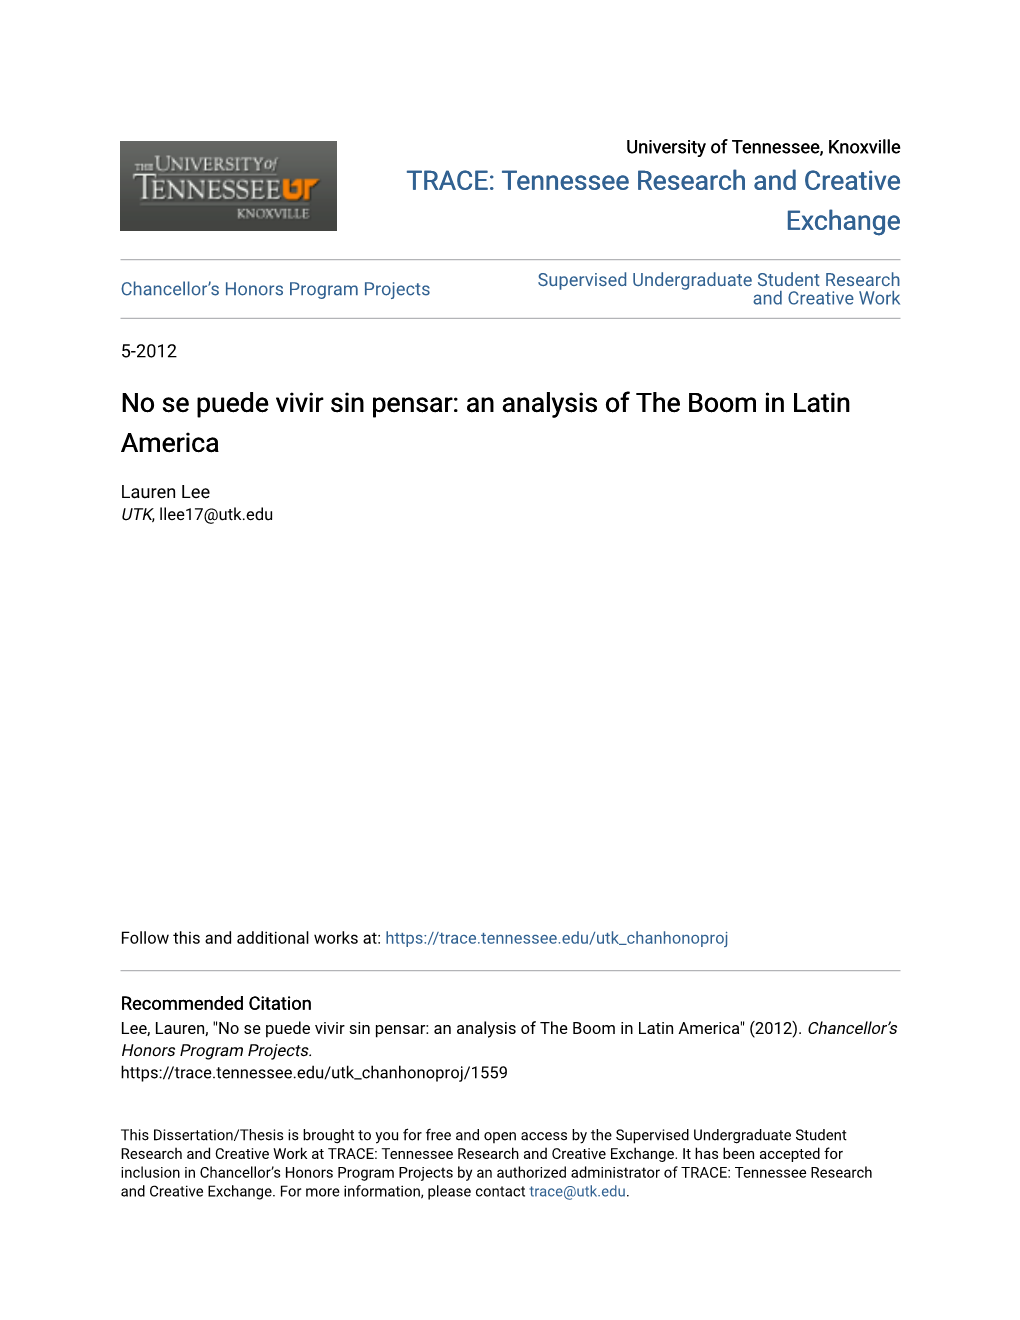 No Se Puede Vivir Sin Pensar: an Analysis of the Boom in Latin America